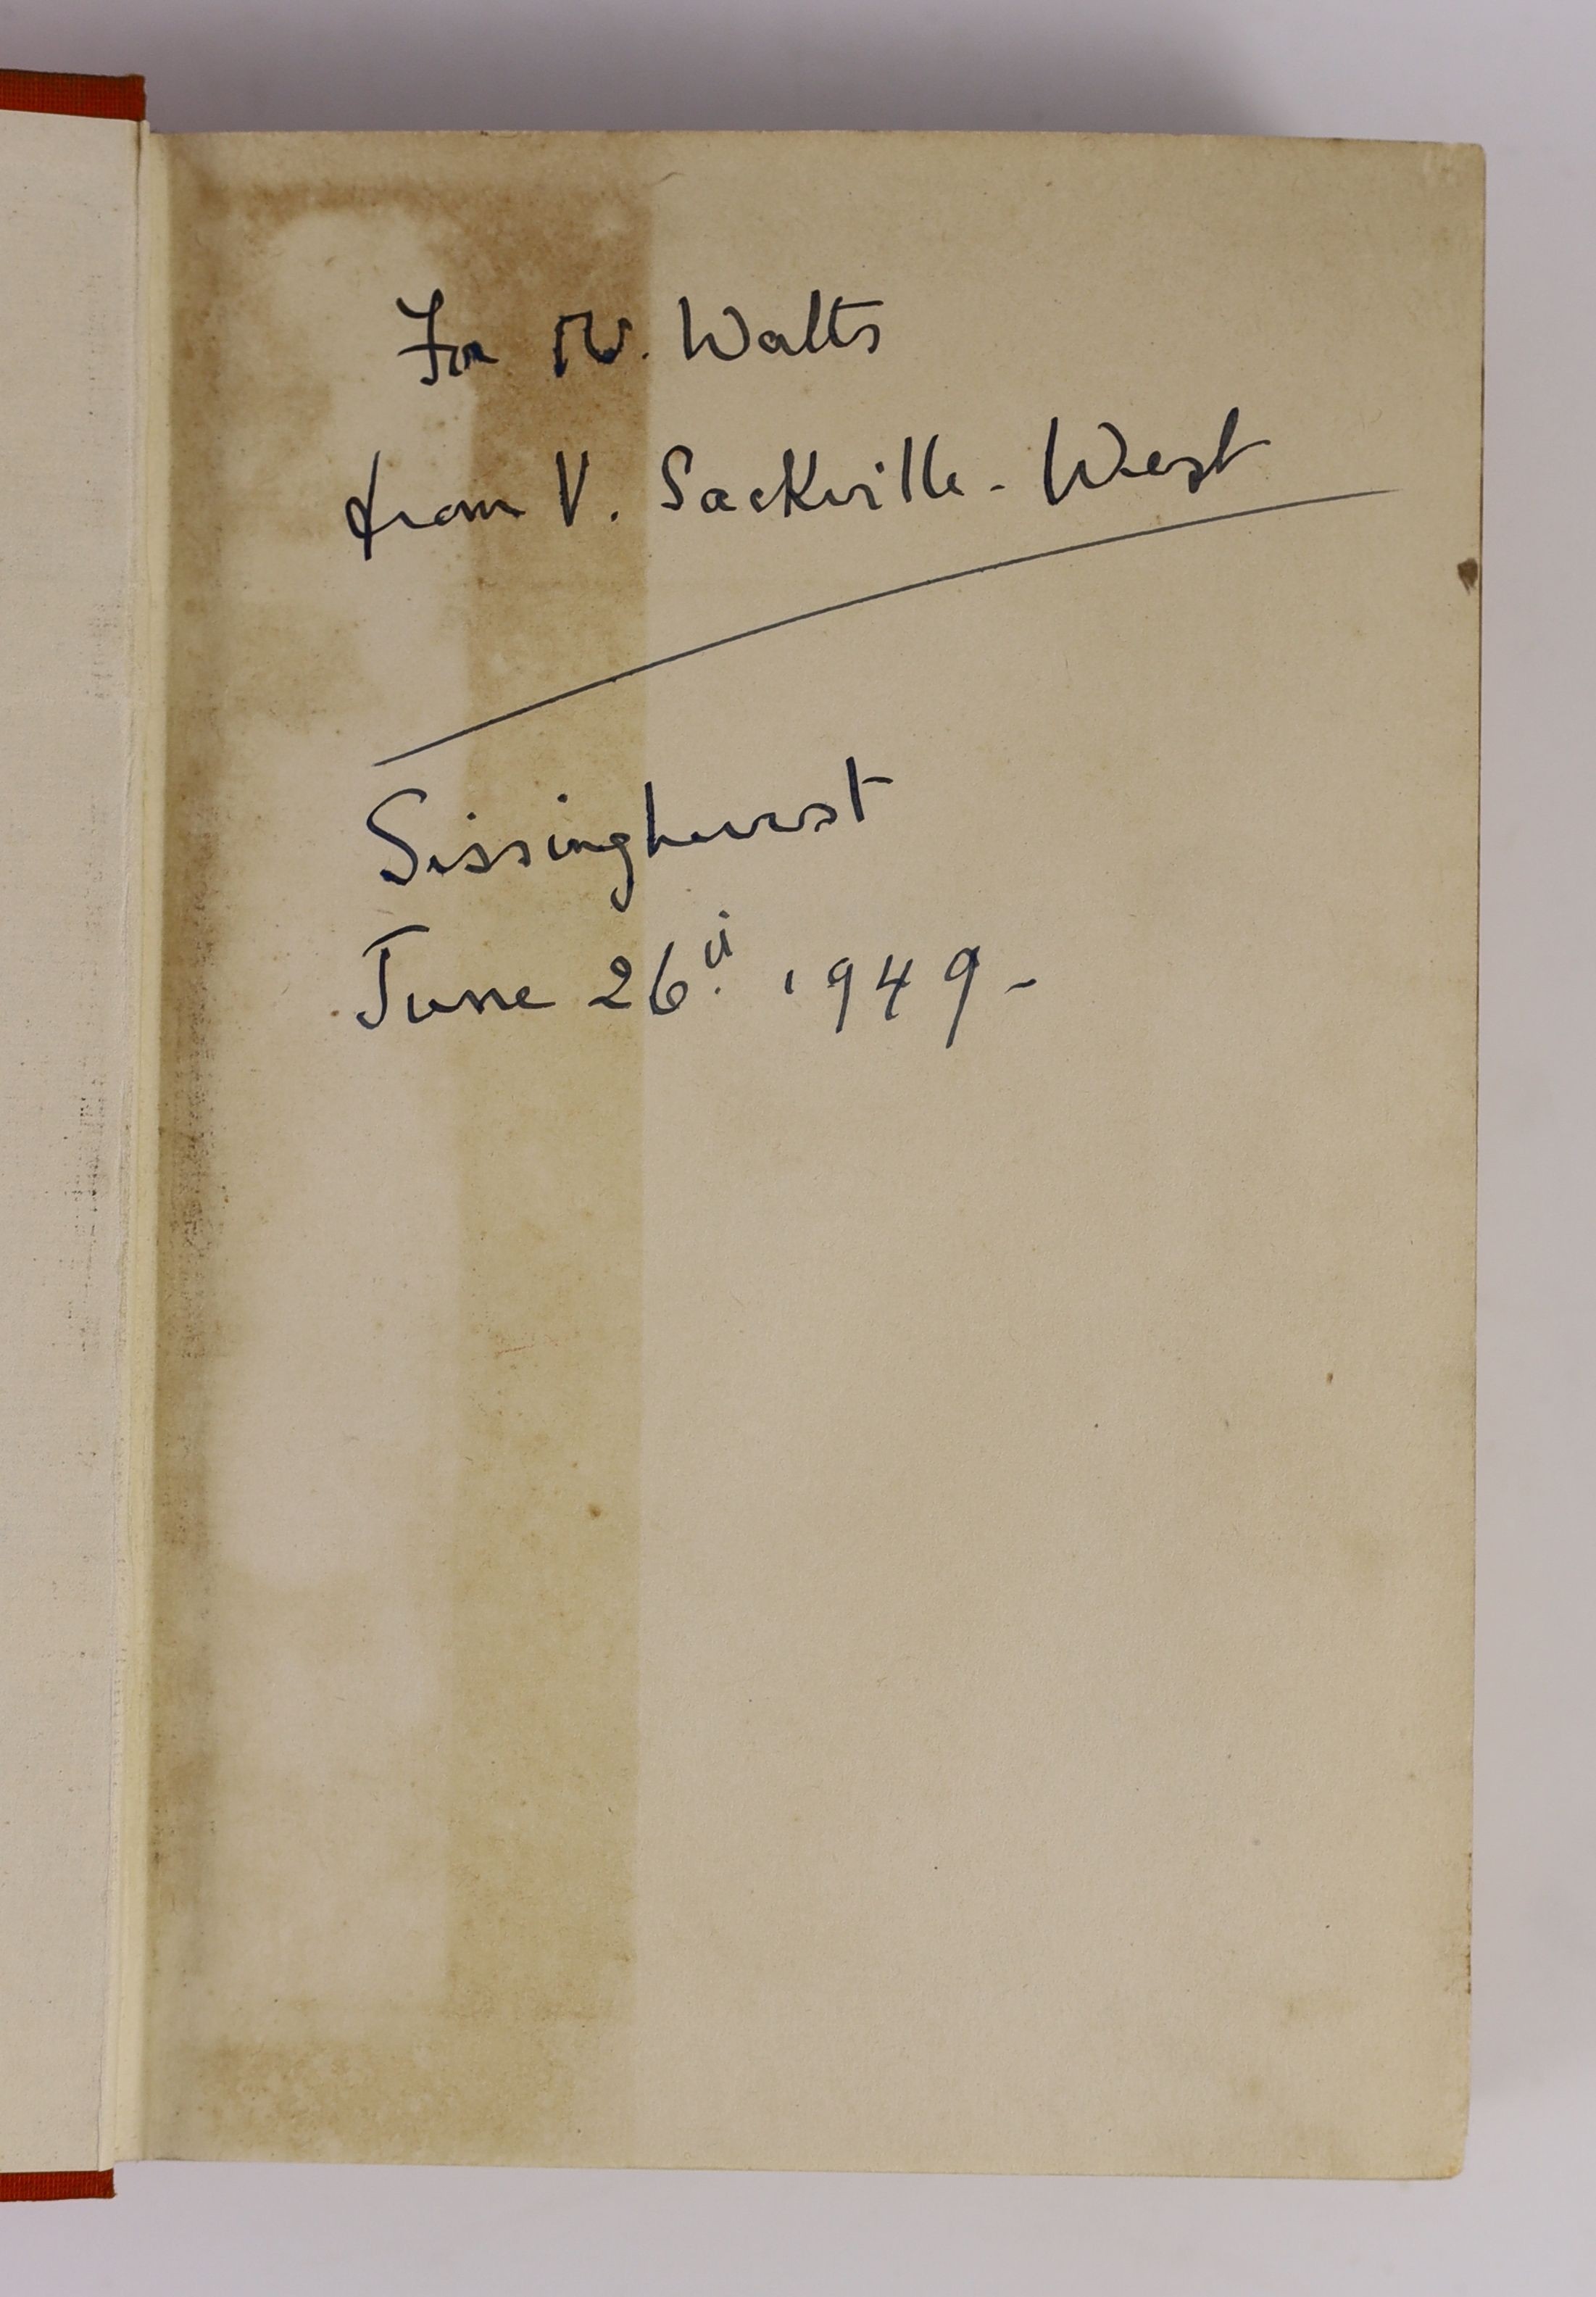 Sackville-West, Vita - The Edwardians, 1st edition, with authors presentation inscription, dated, Sisinghurst, June 26th 1949, 8vo, original orange cloth, The Hogarth Press, London, 1930